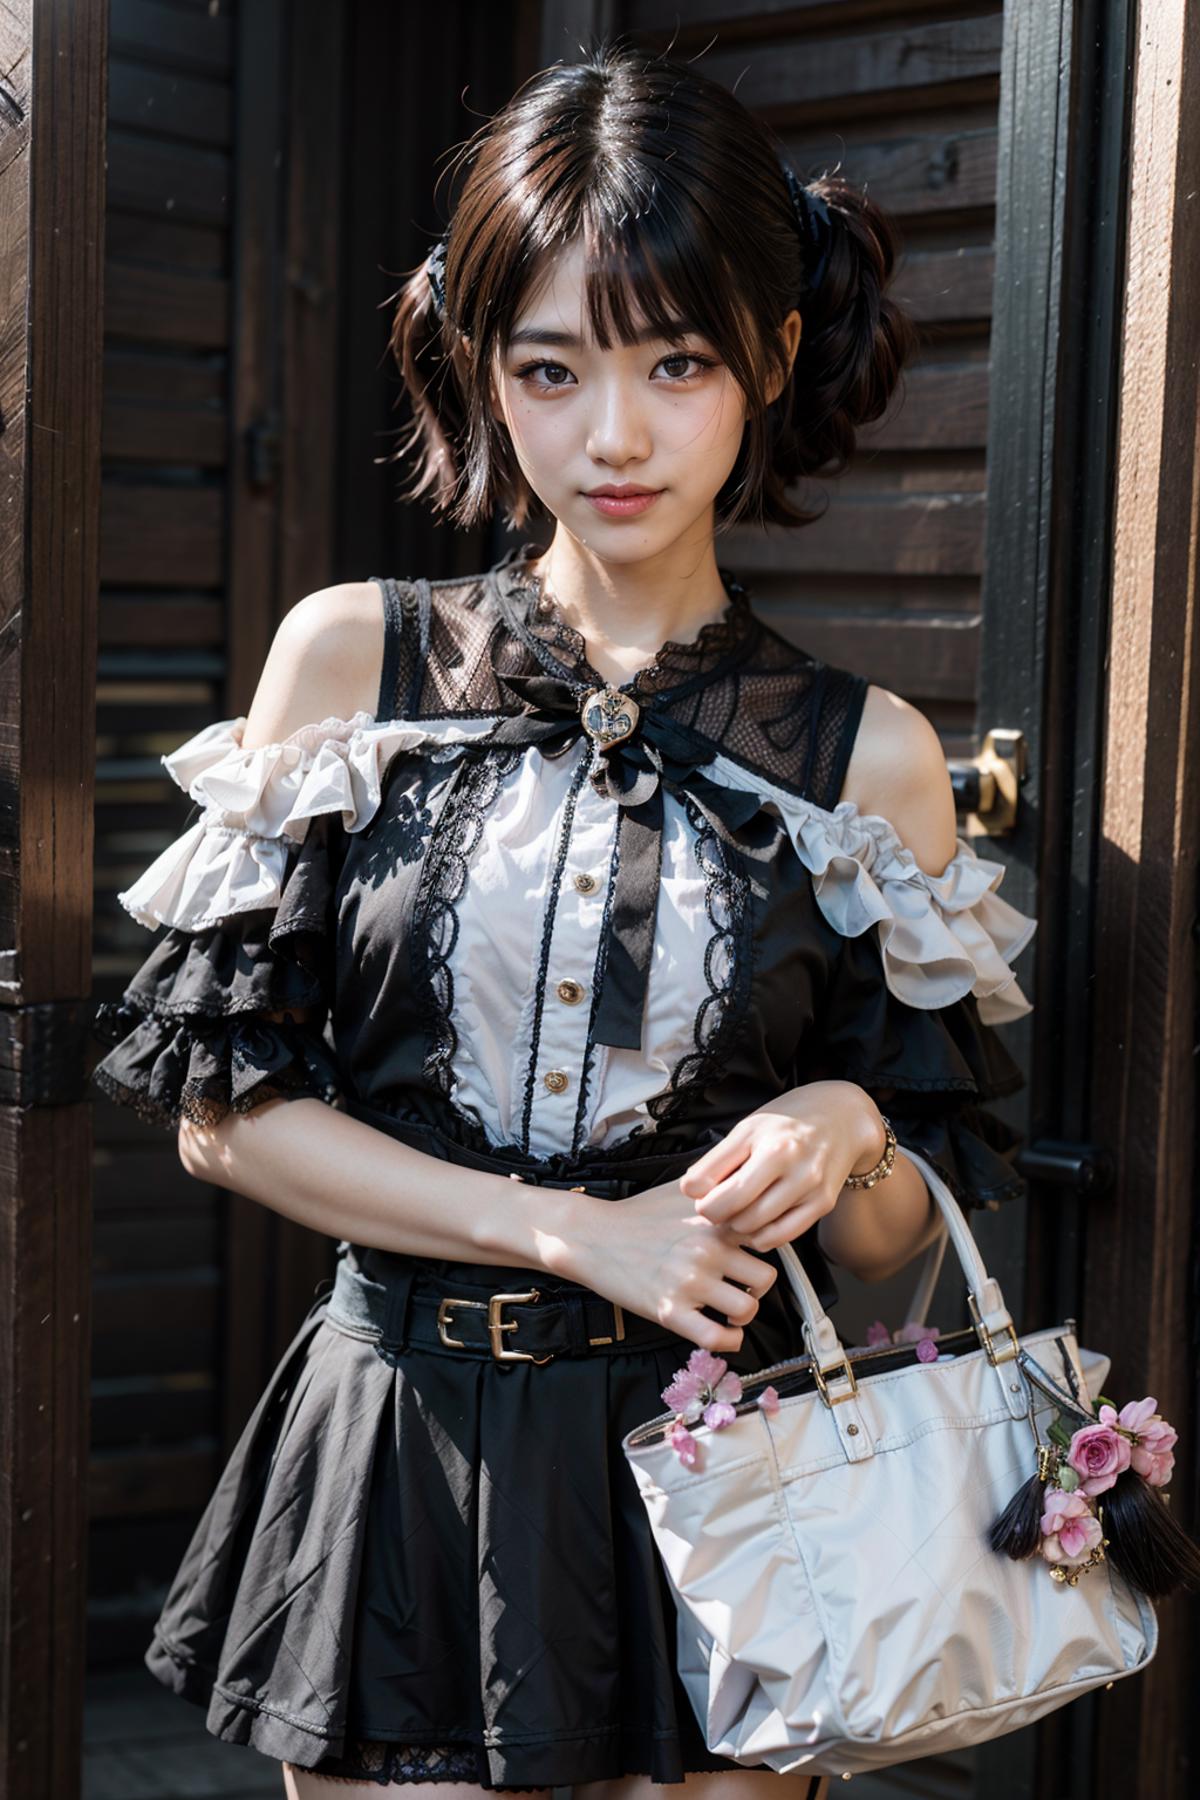 Jirai Kei fashion dress | 地雷系服装 image by feetie